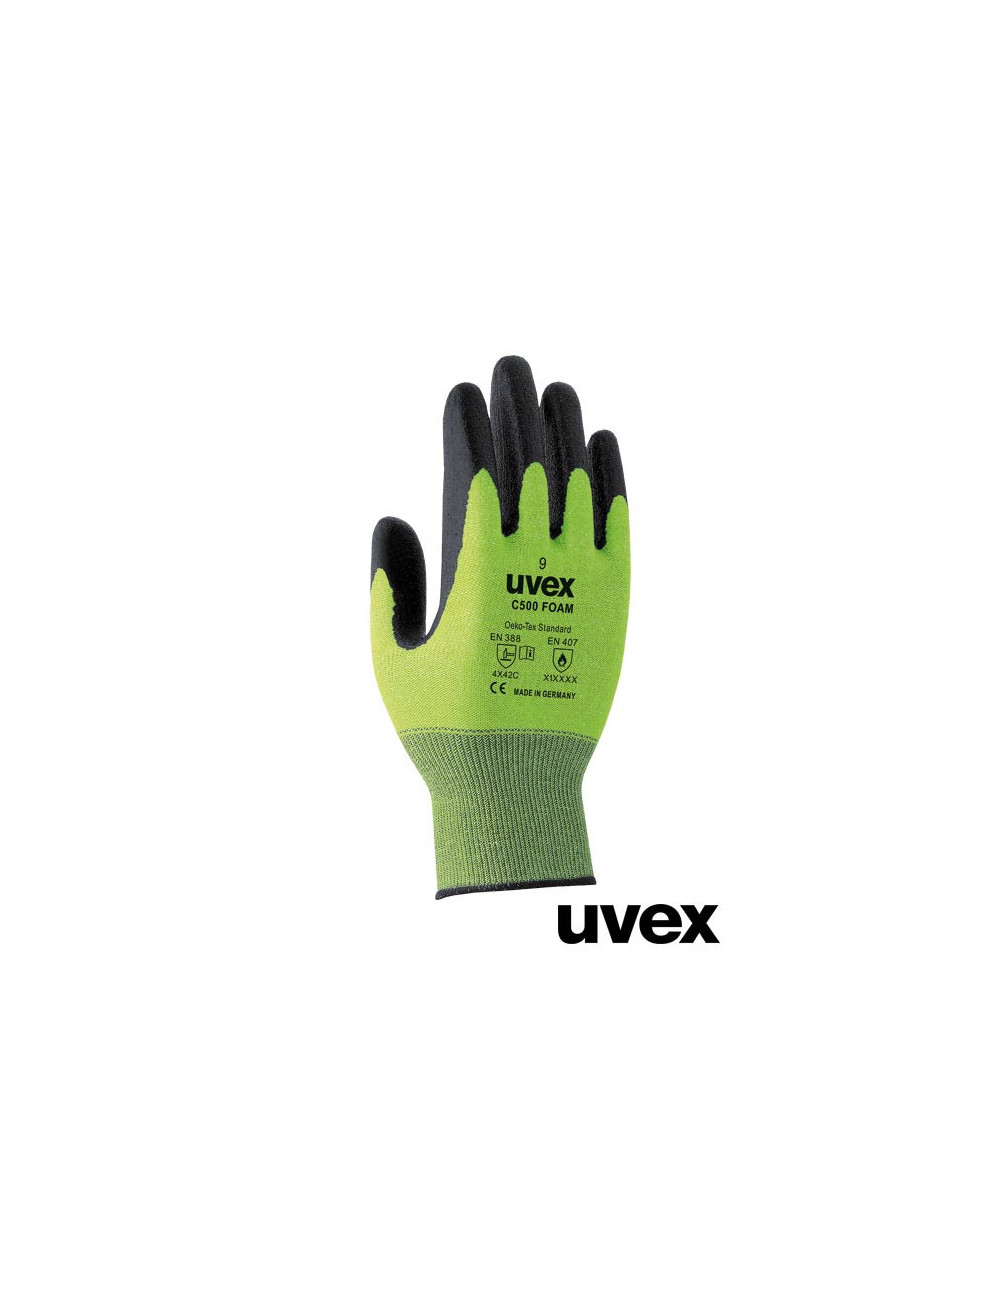 Protective gloves zb green-black Uvex Ruvex-c500foam